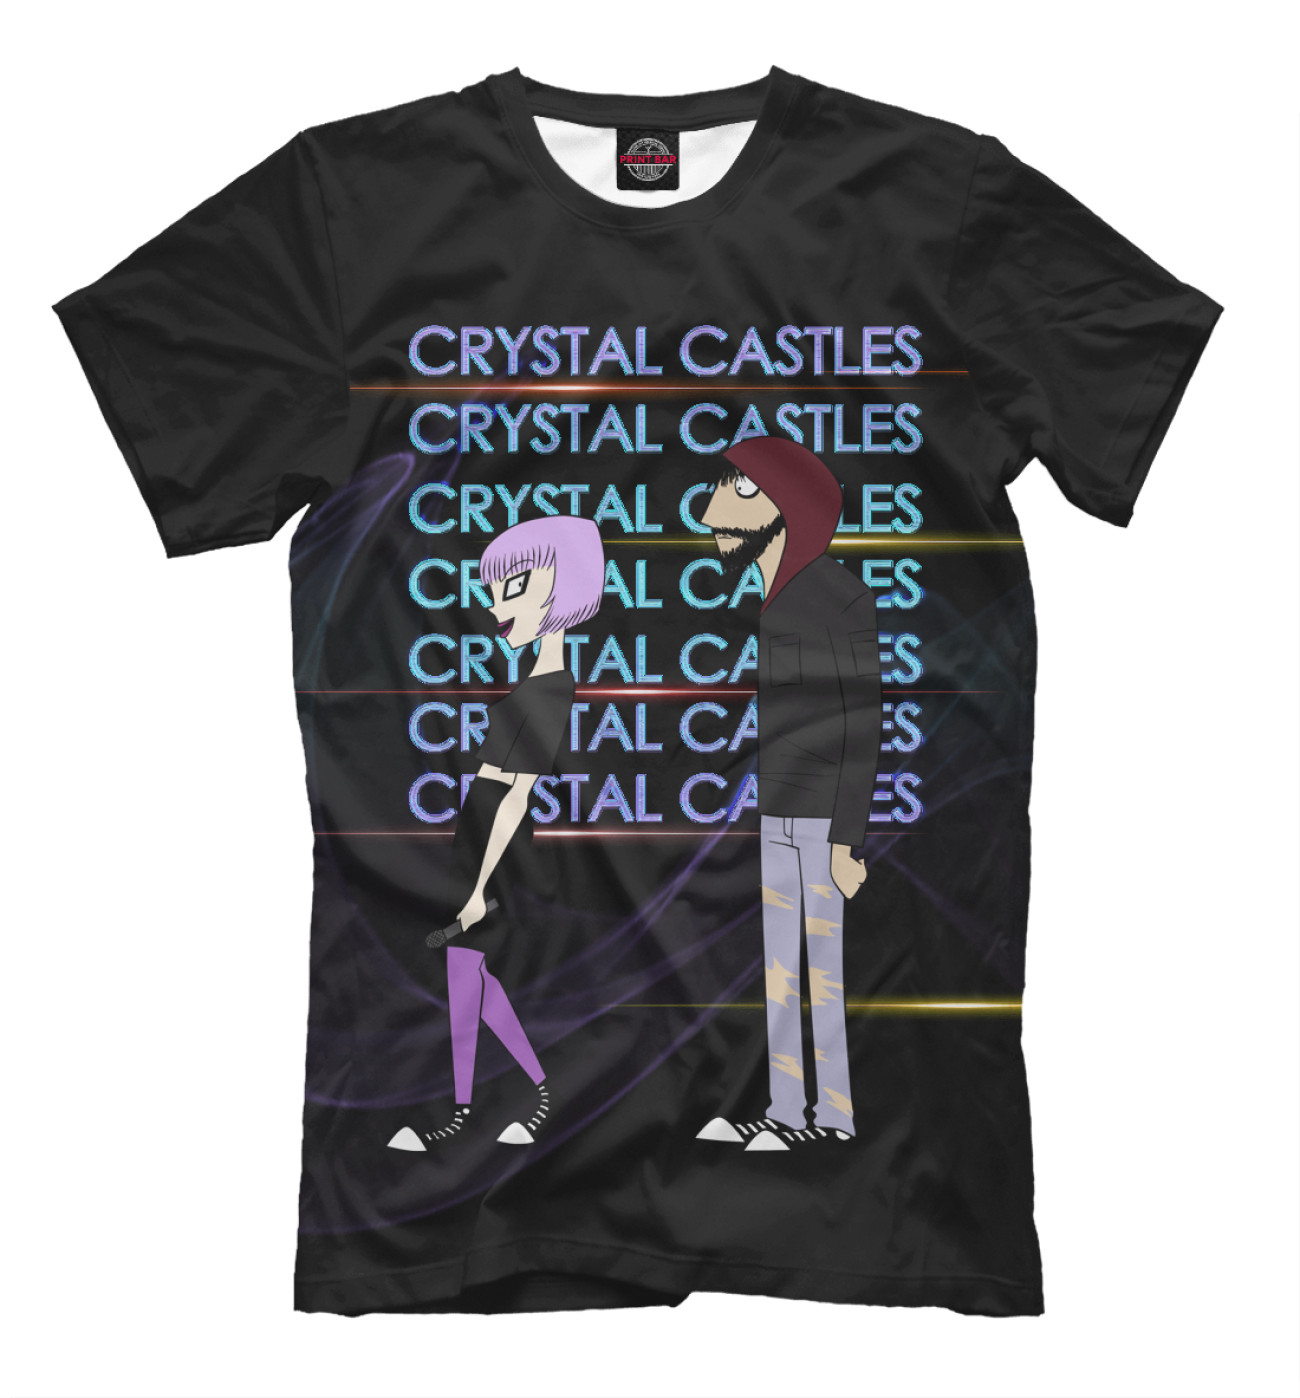 Мужская Футболка Crystal Castles, артикул: MZK-649401-fut-2